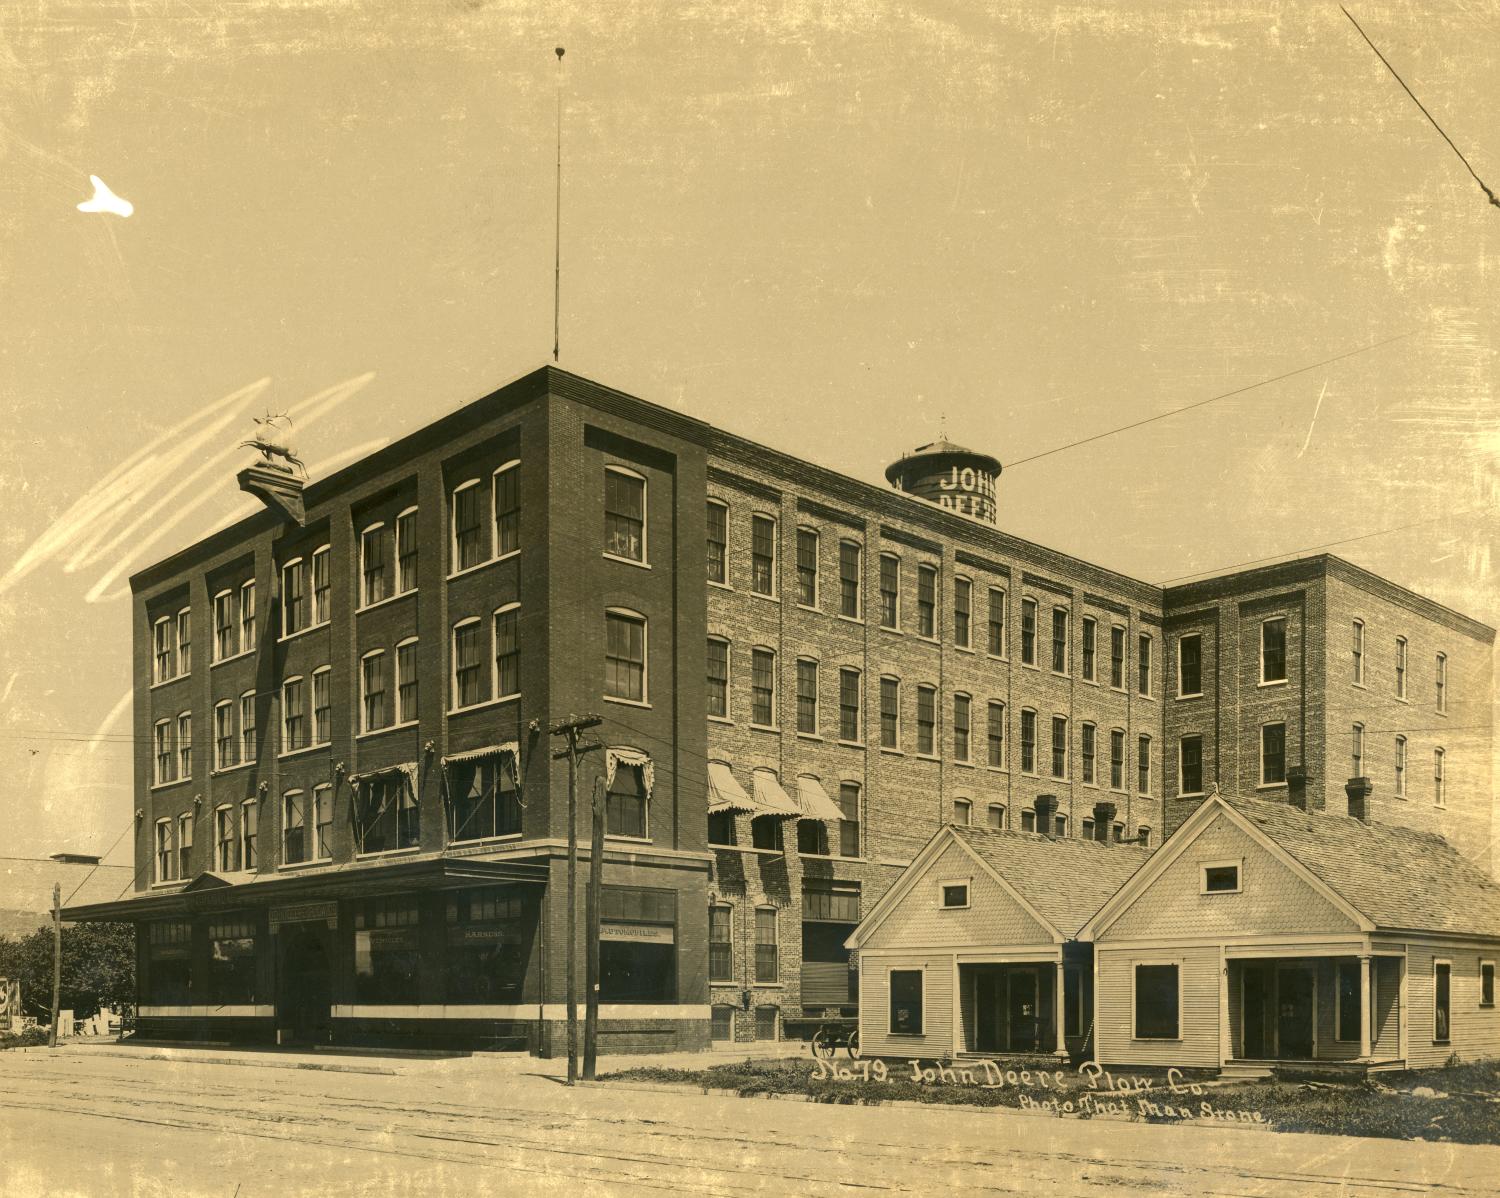 John Deer Plow Company Building
                                                
                                                    [Sequence #]: 1 of 1
                                                